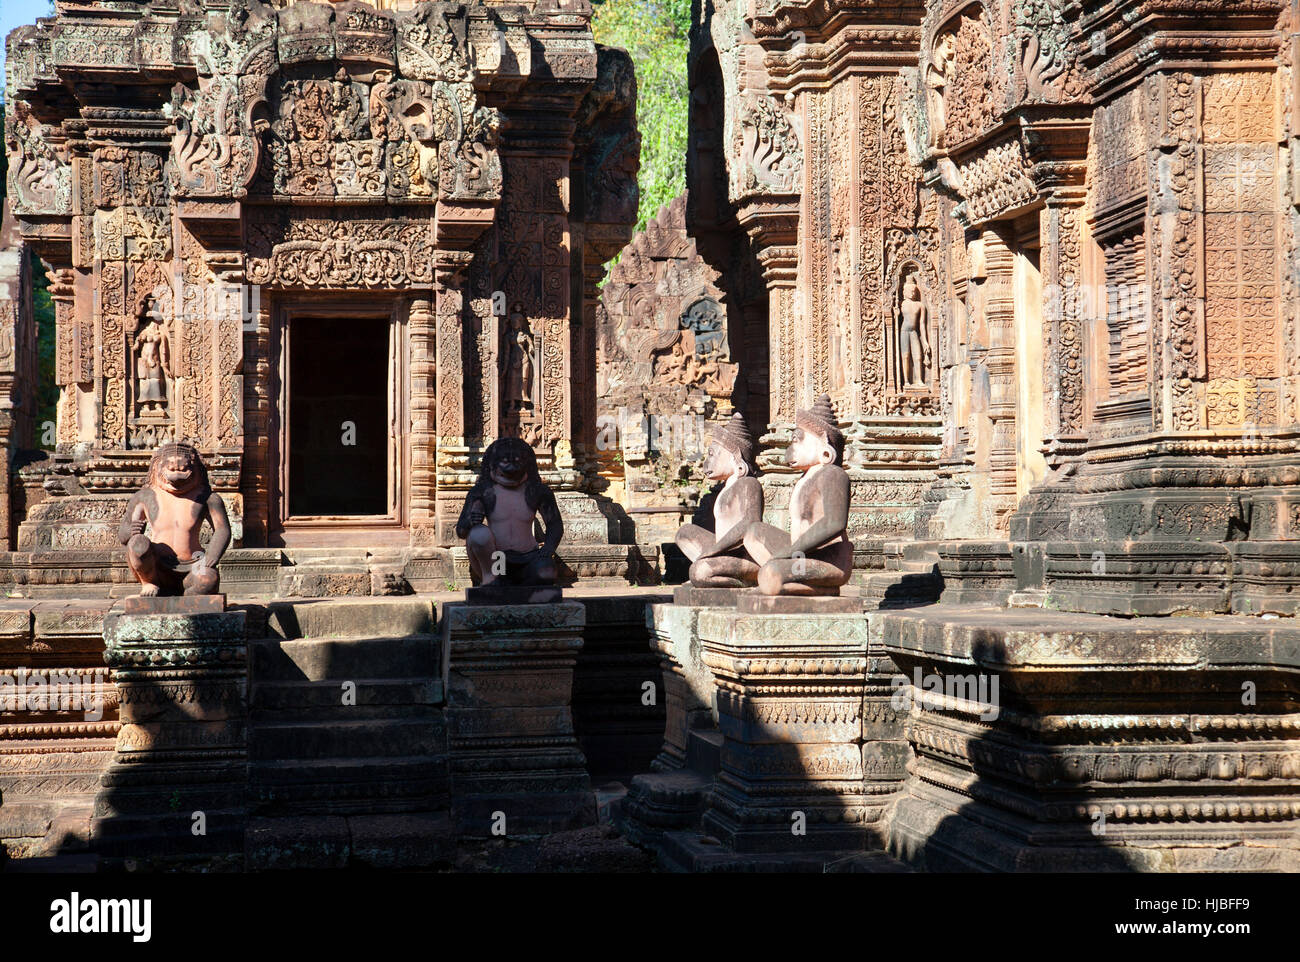 Banteay Srei Temple in Siem Reap, Cambodia Stock Photo